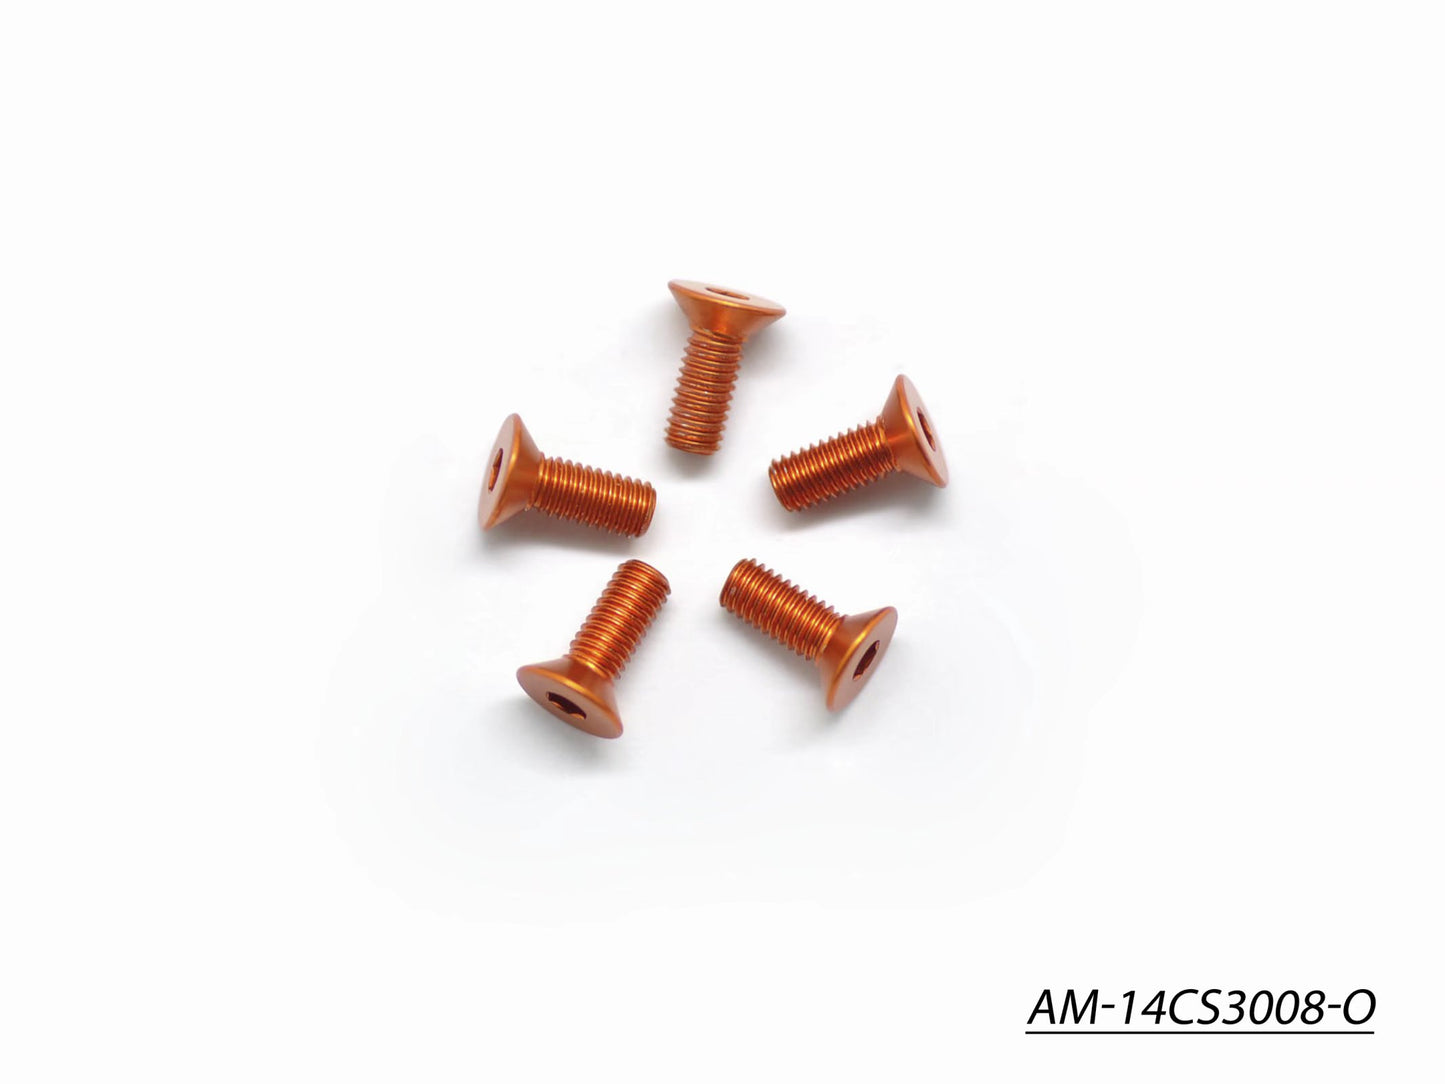 Alu Screw Allen Countersunk M3X8 Orange (7075) (5) (AM-14CS3008-O)